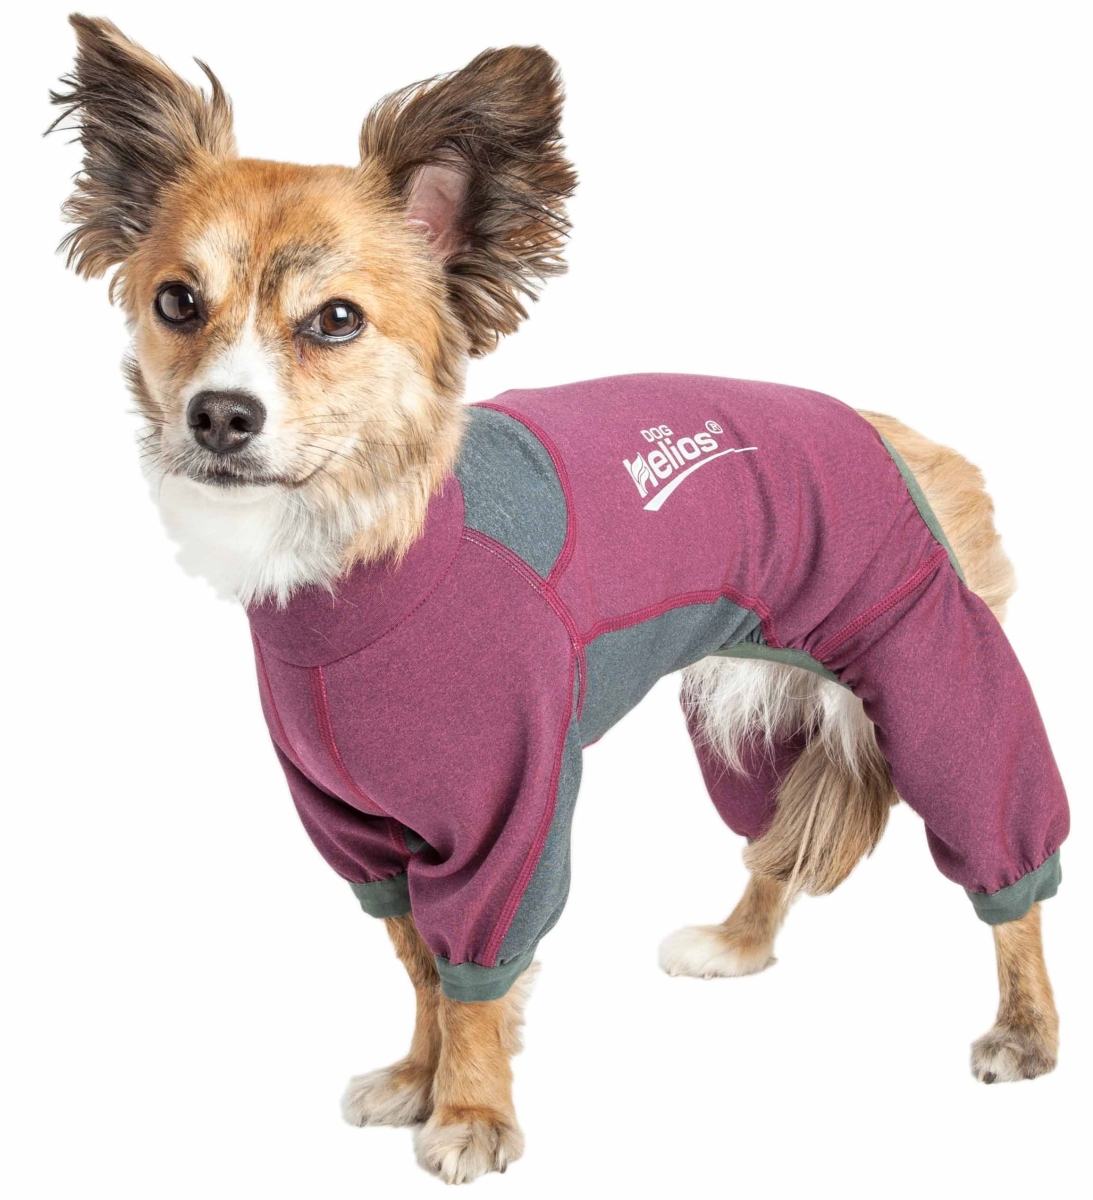 Yghl8pkmd Rufflex 4-way-stretch Breathable Full Bodied Performance Dog Warmup Track Suit - Pink & Grey, Medium